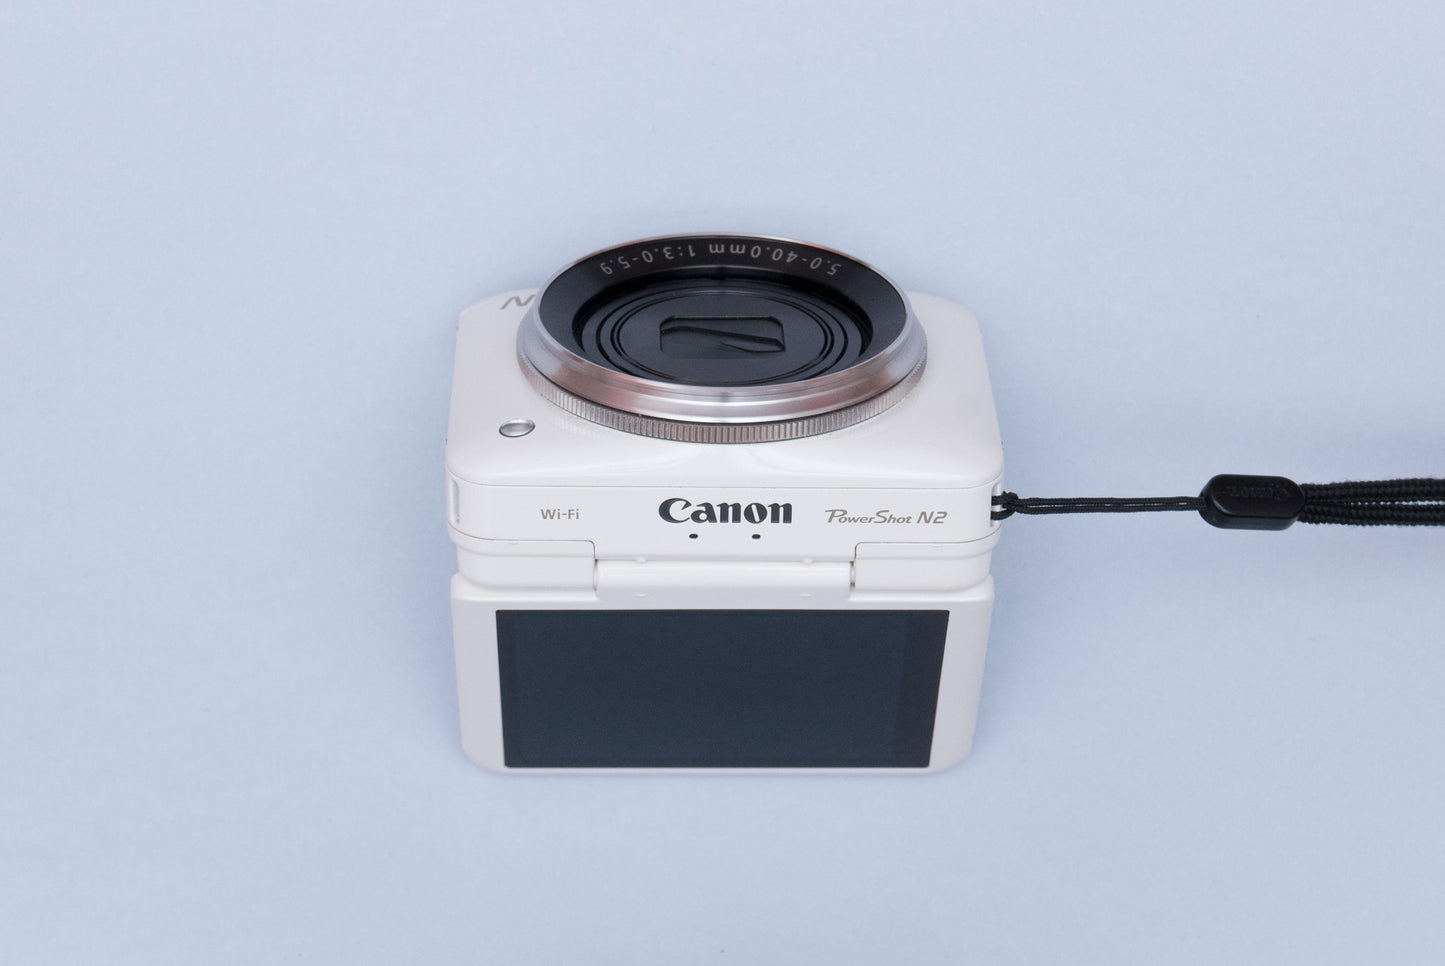 Canon PowerShot N2 Compact Digital Camera